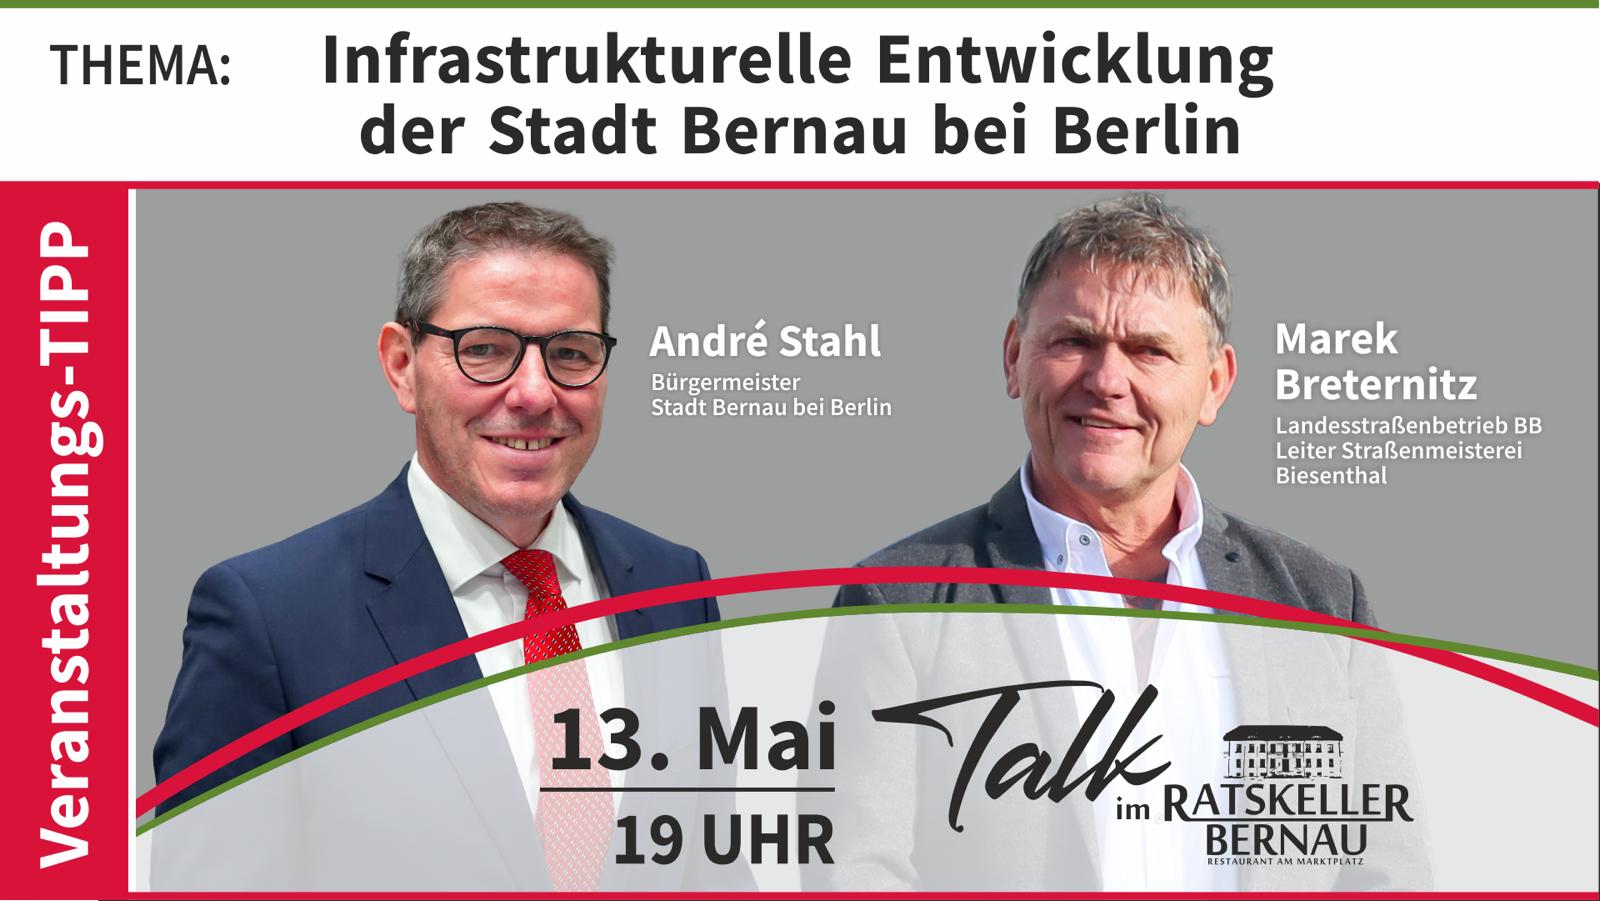 Talk im Ratskeller Bernau